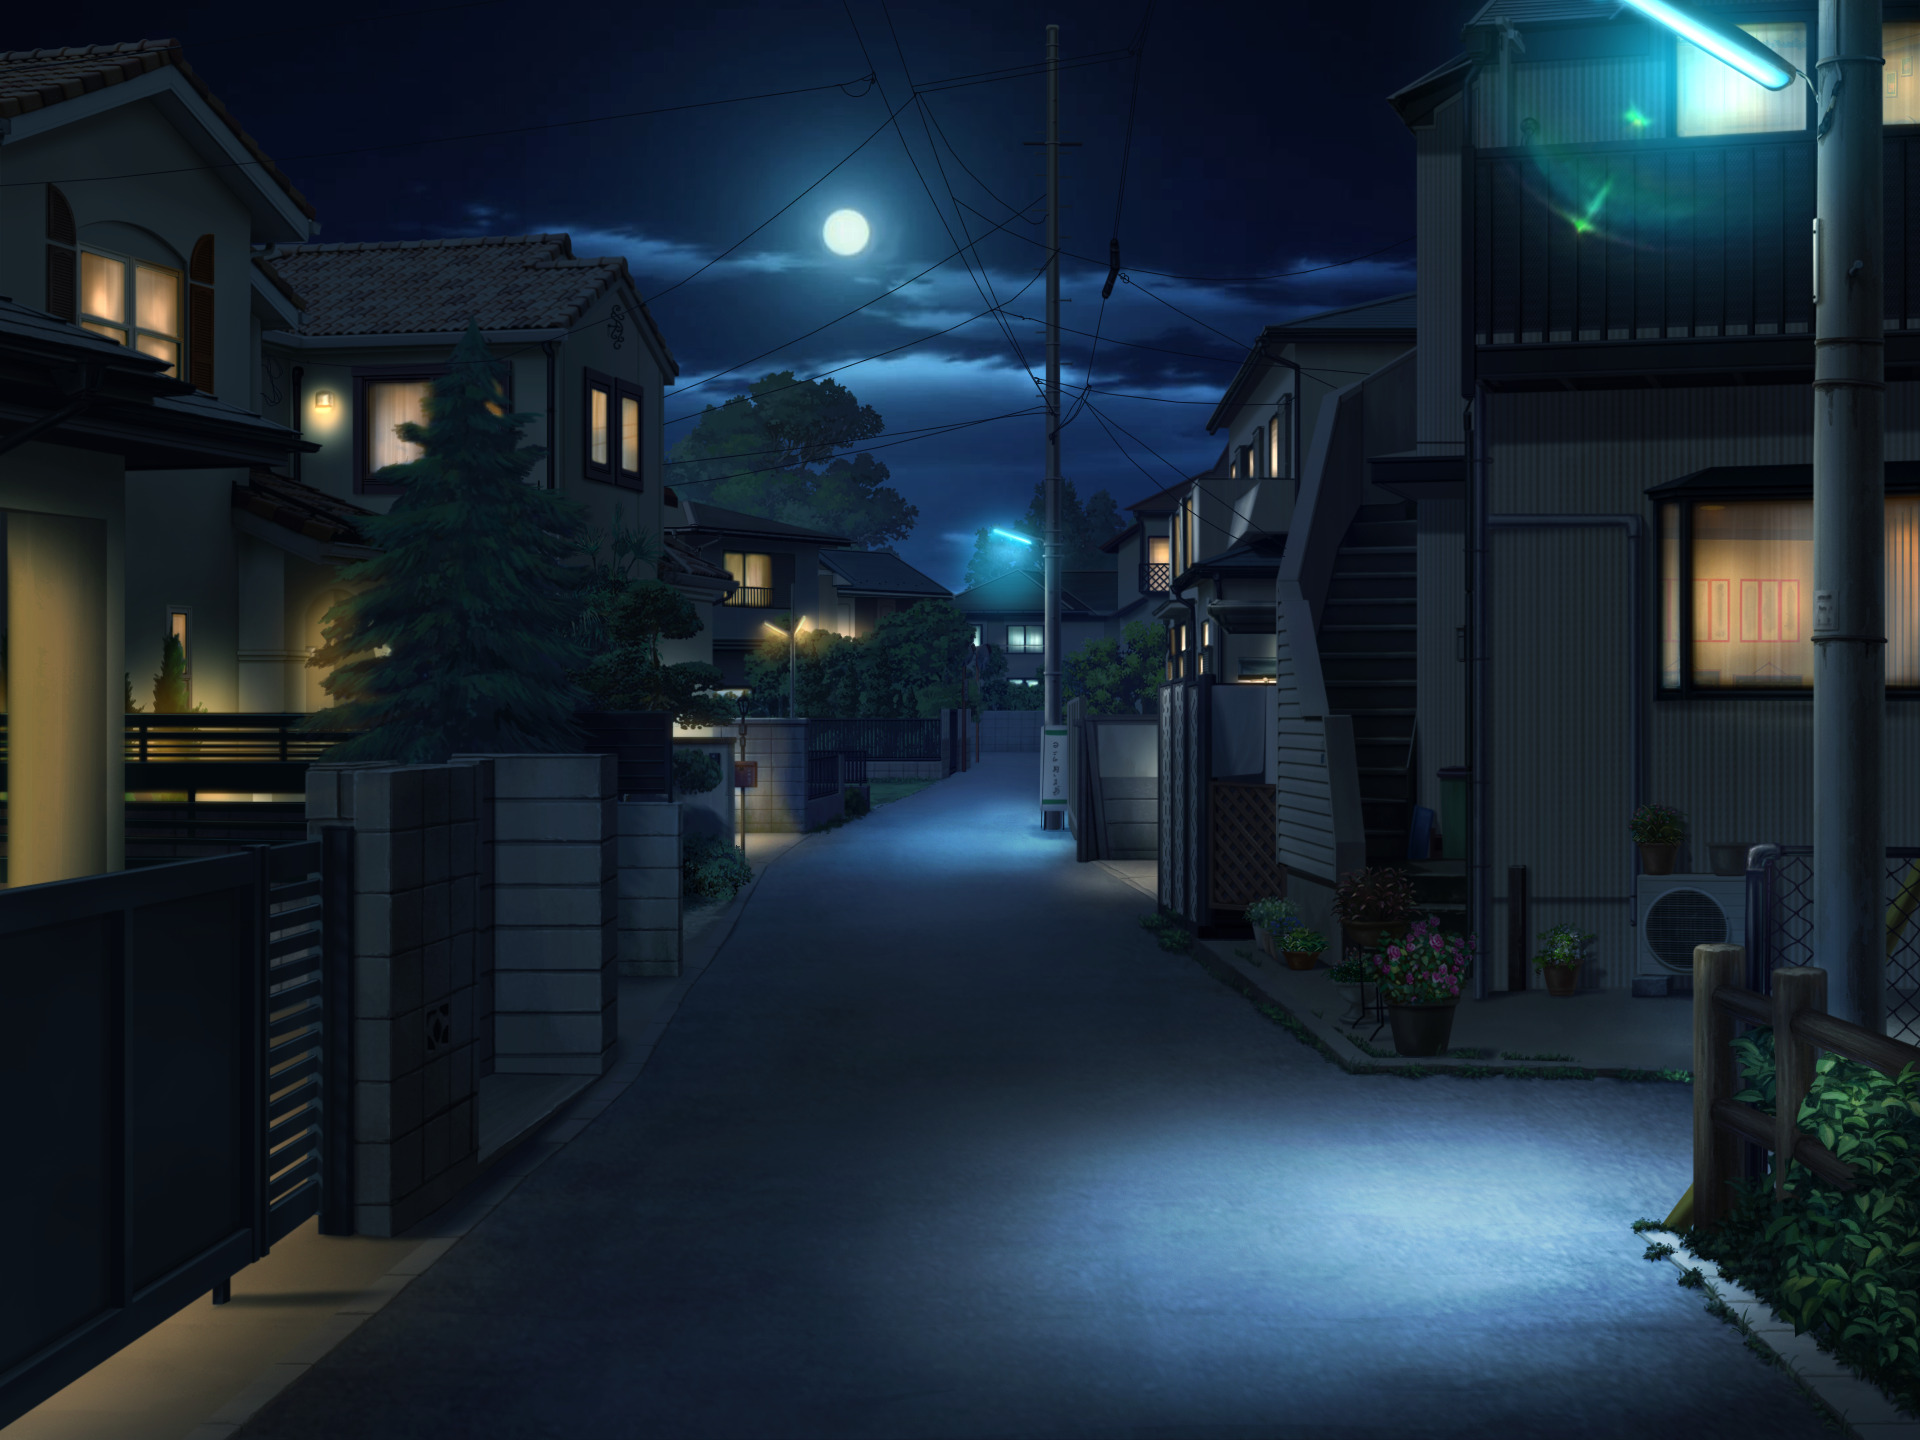 Neighborhood (Night)